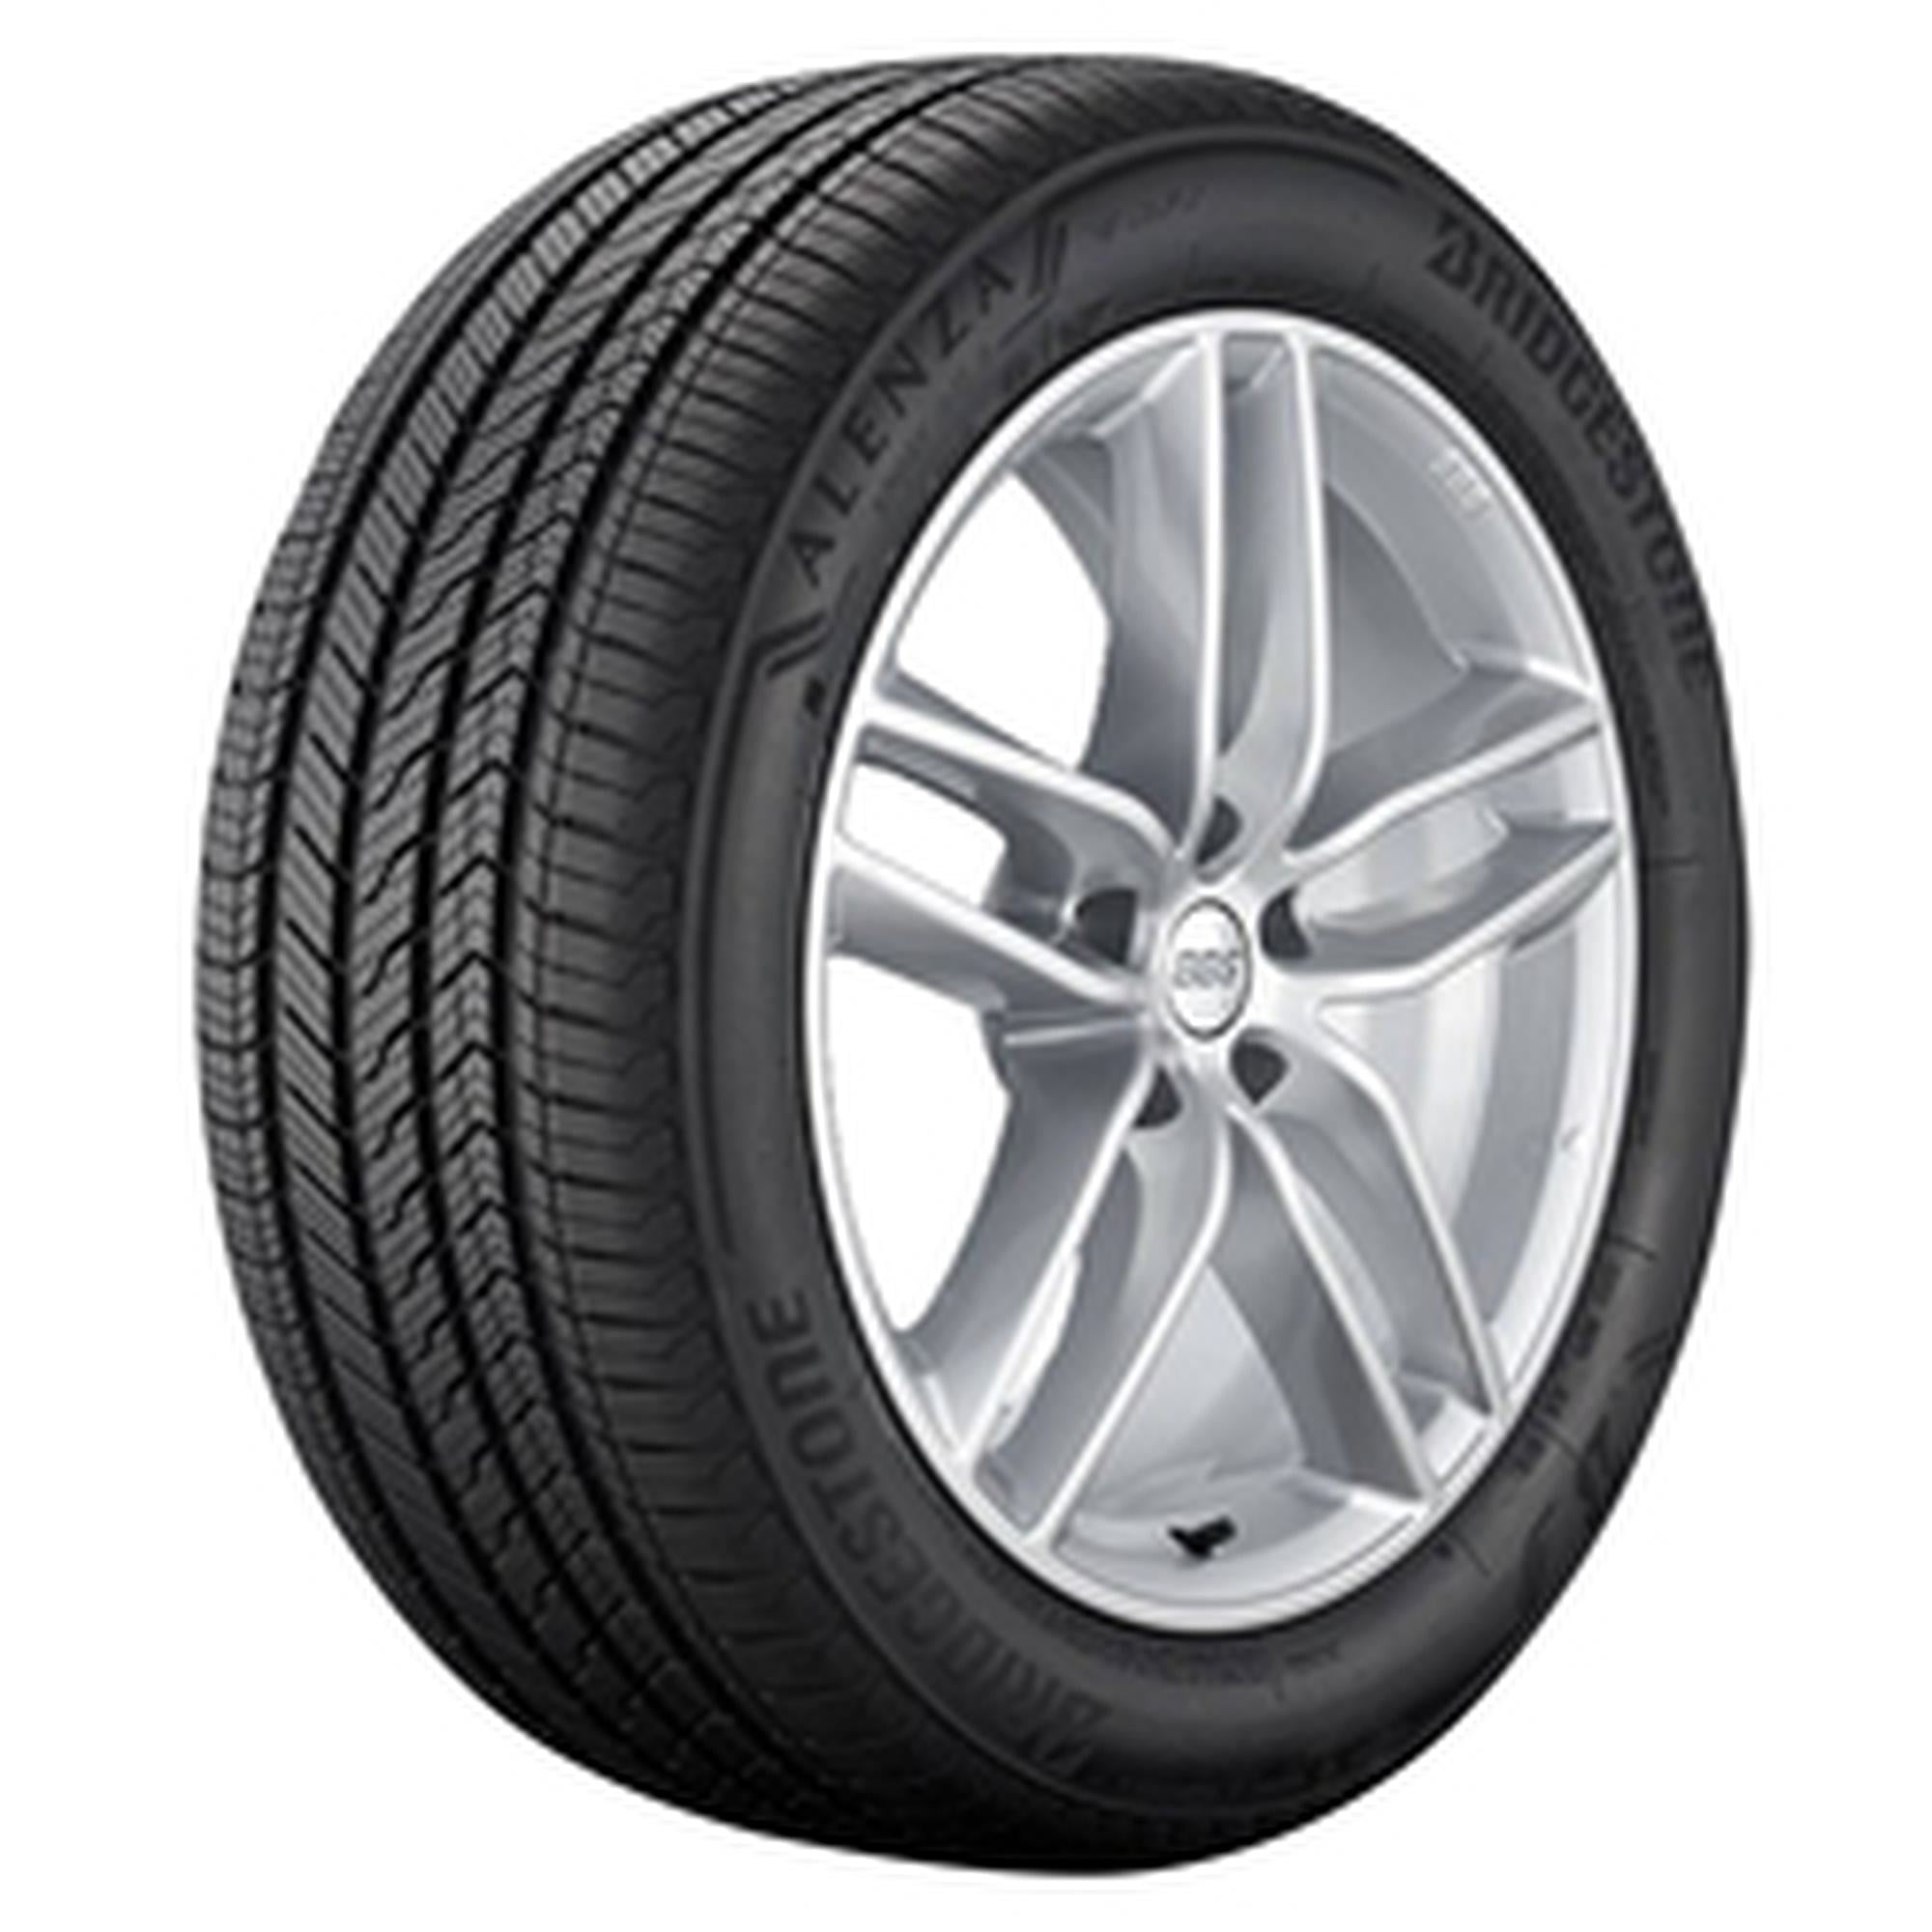 Bridgestone Alenza A/S 255/55R19 Sport Passenger 107H Tire Season UHP All